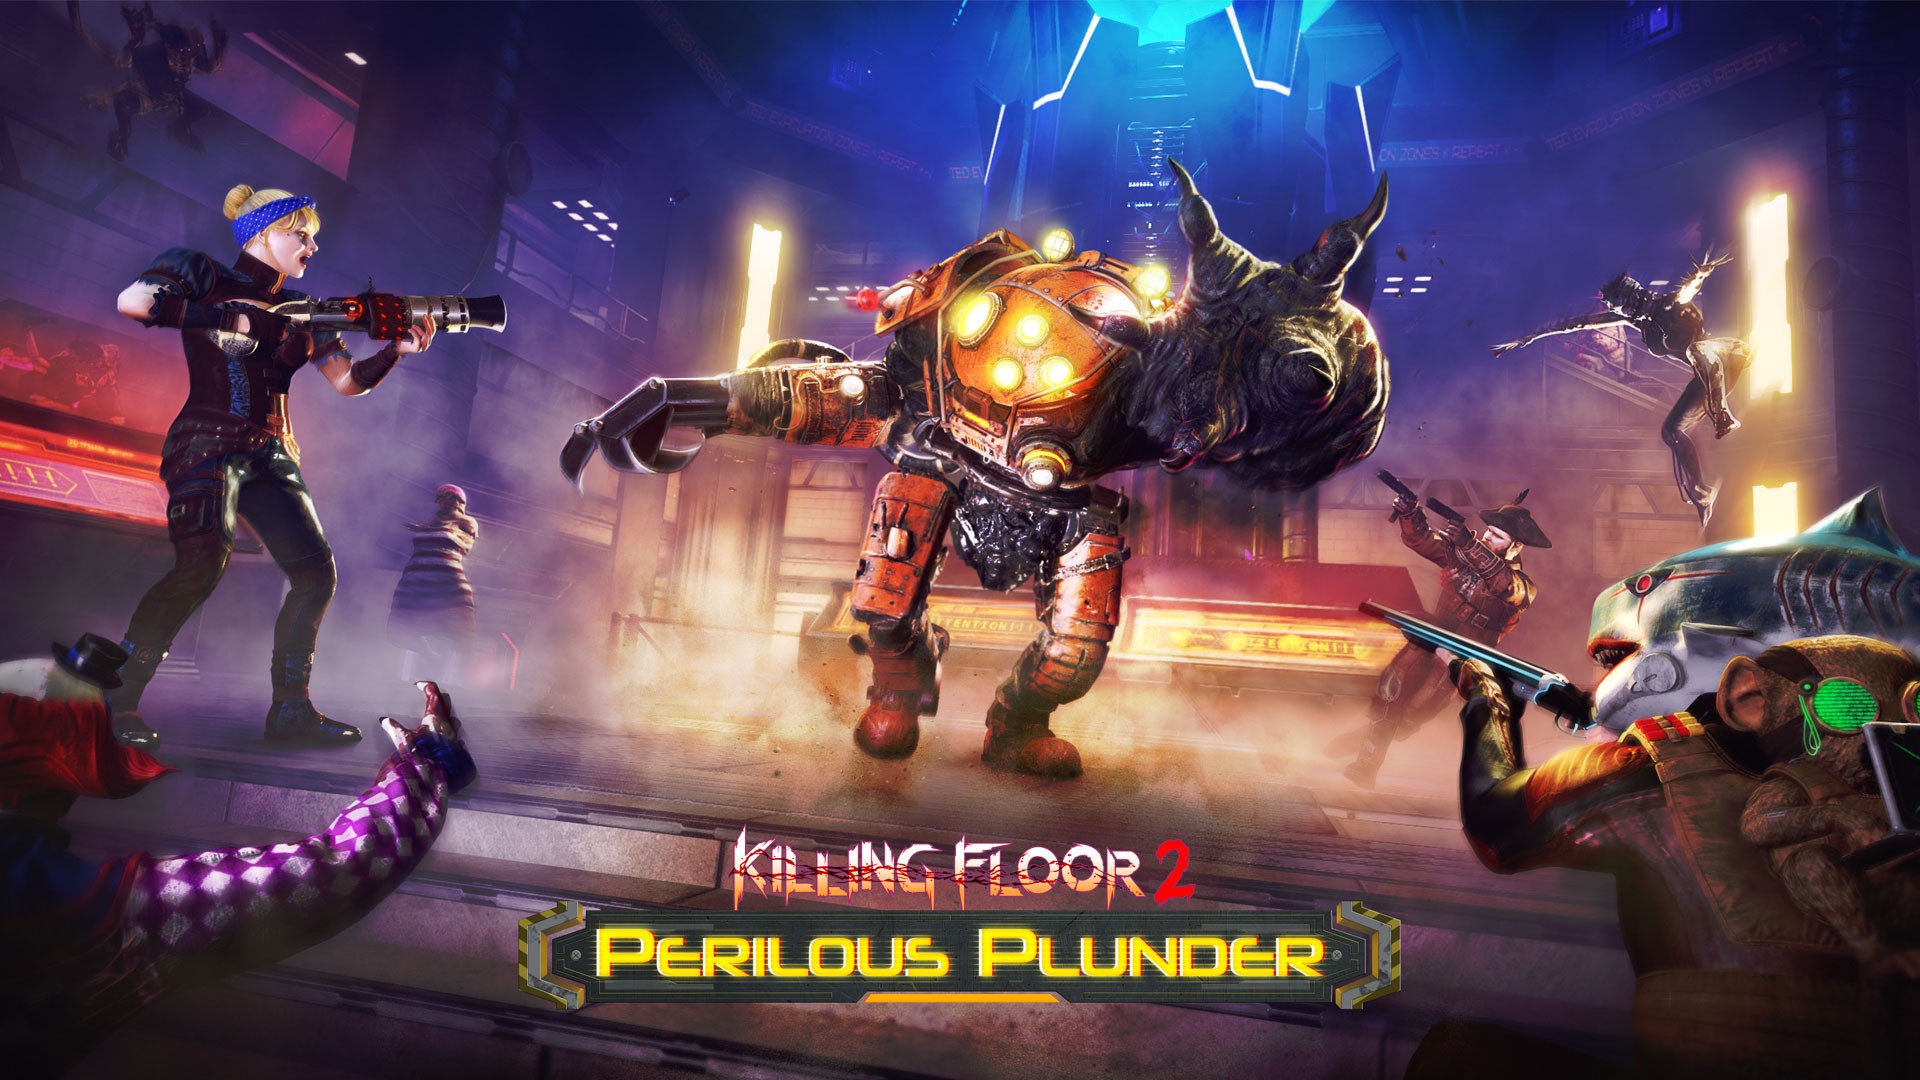 Killing Floor 2: Perilous Plunder